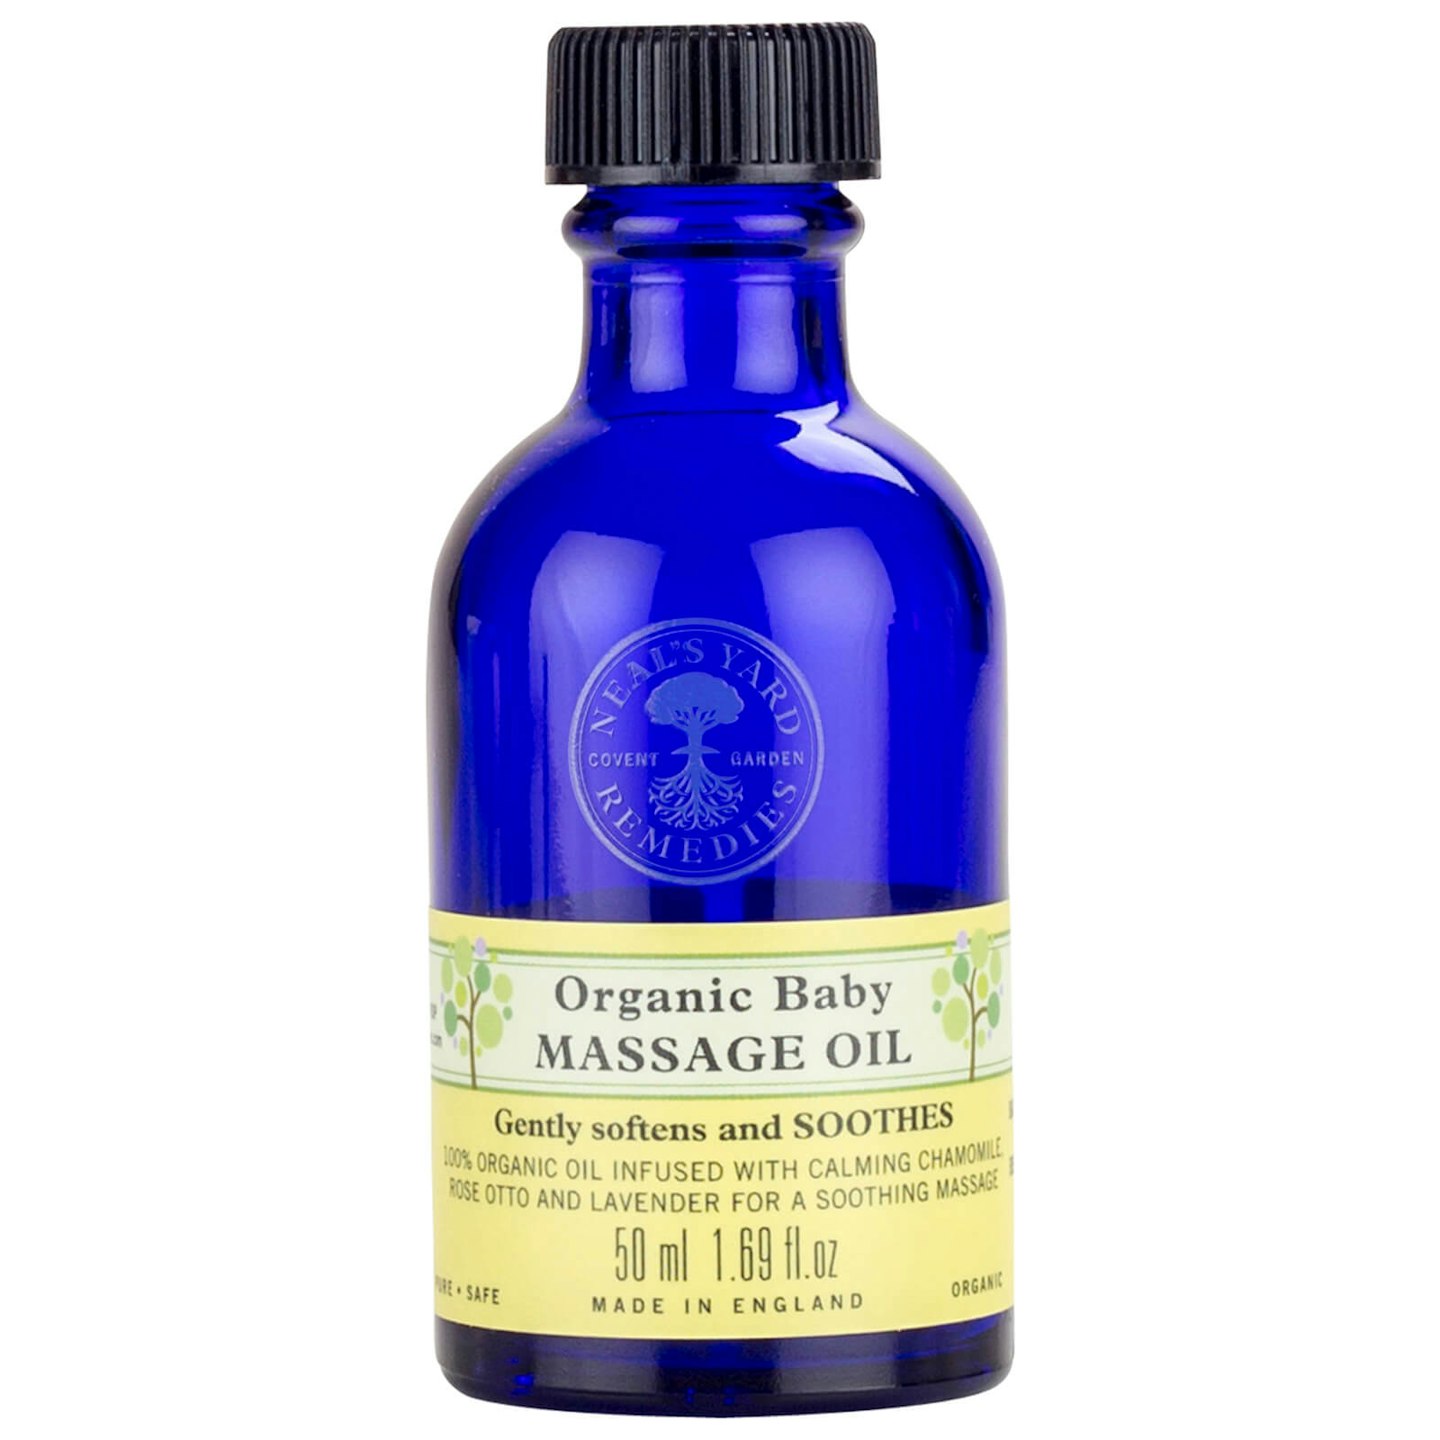 Neals Yard Organic Baby Massage Oil